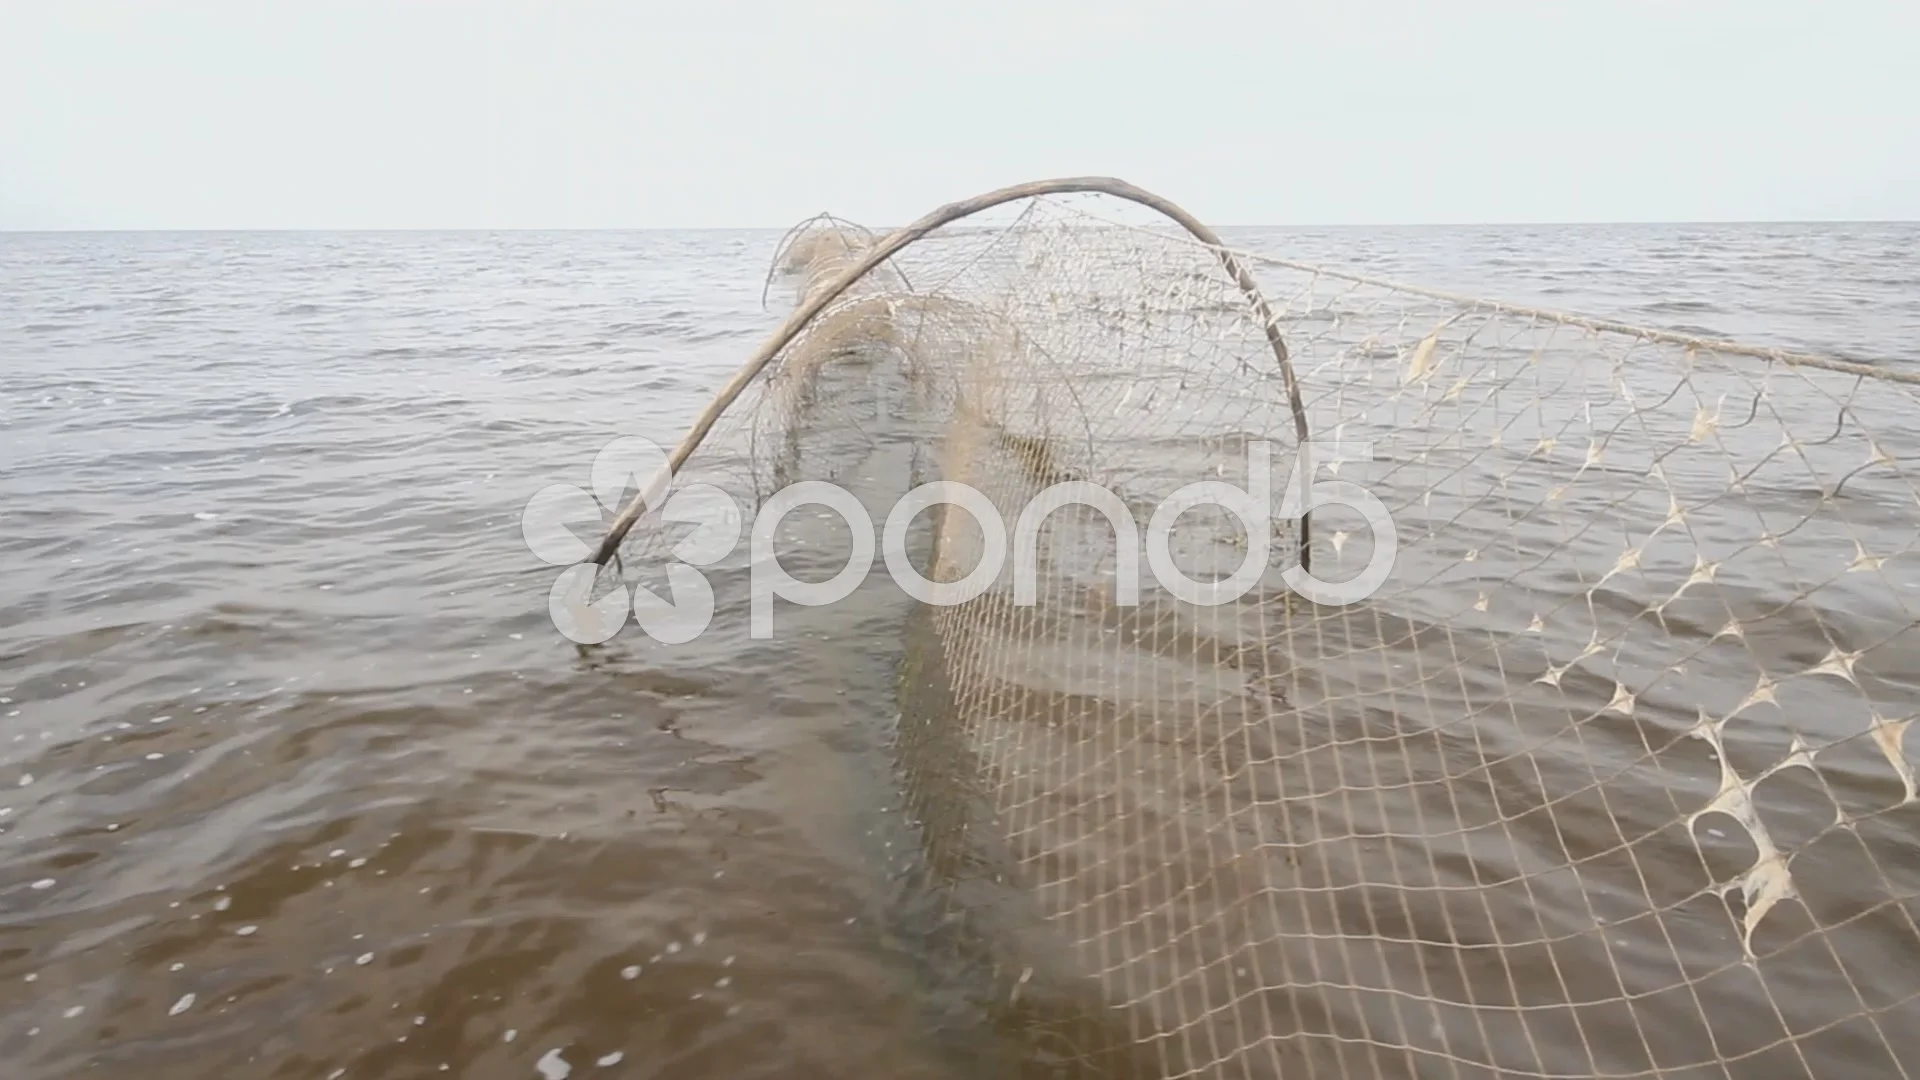 https://images.pond5.com/fishing-net-fish-trap-lake-footage-044650952_prevstill.jpeg